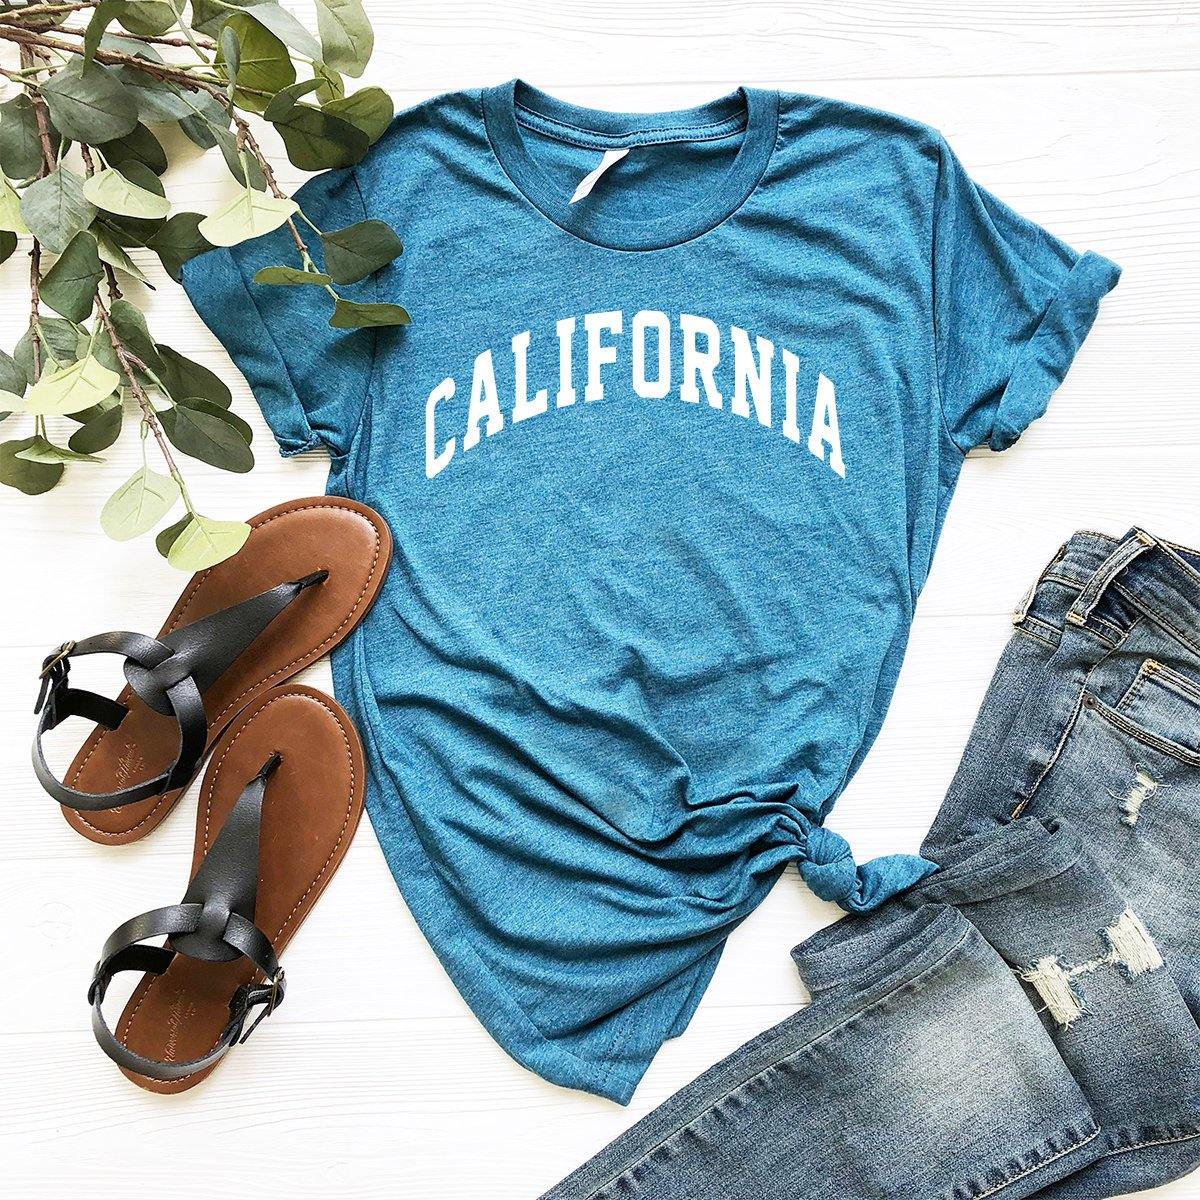 California Shirt, West Cost Tee, California Dreaming Tee, California Tshirt, Cali Girl Shirt, Trendy California Shirt, California State Tee - Fastdeliverytees.com